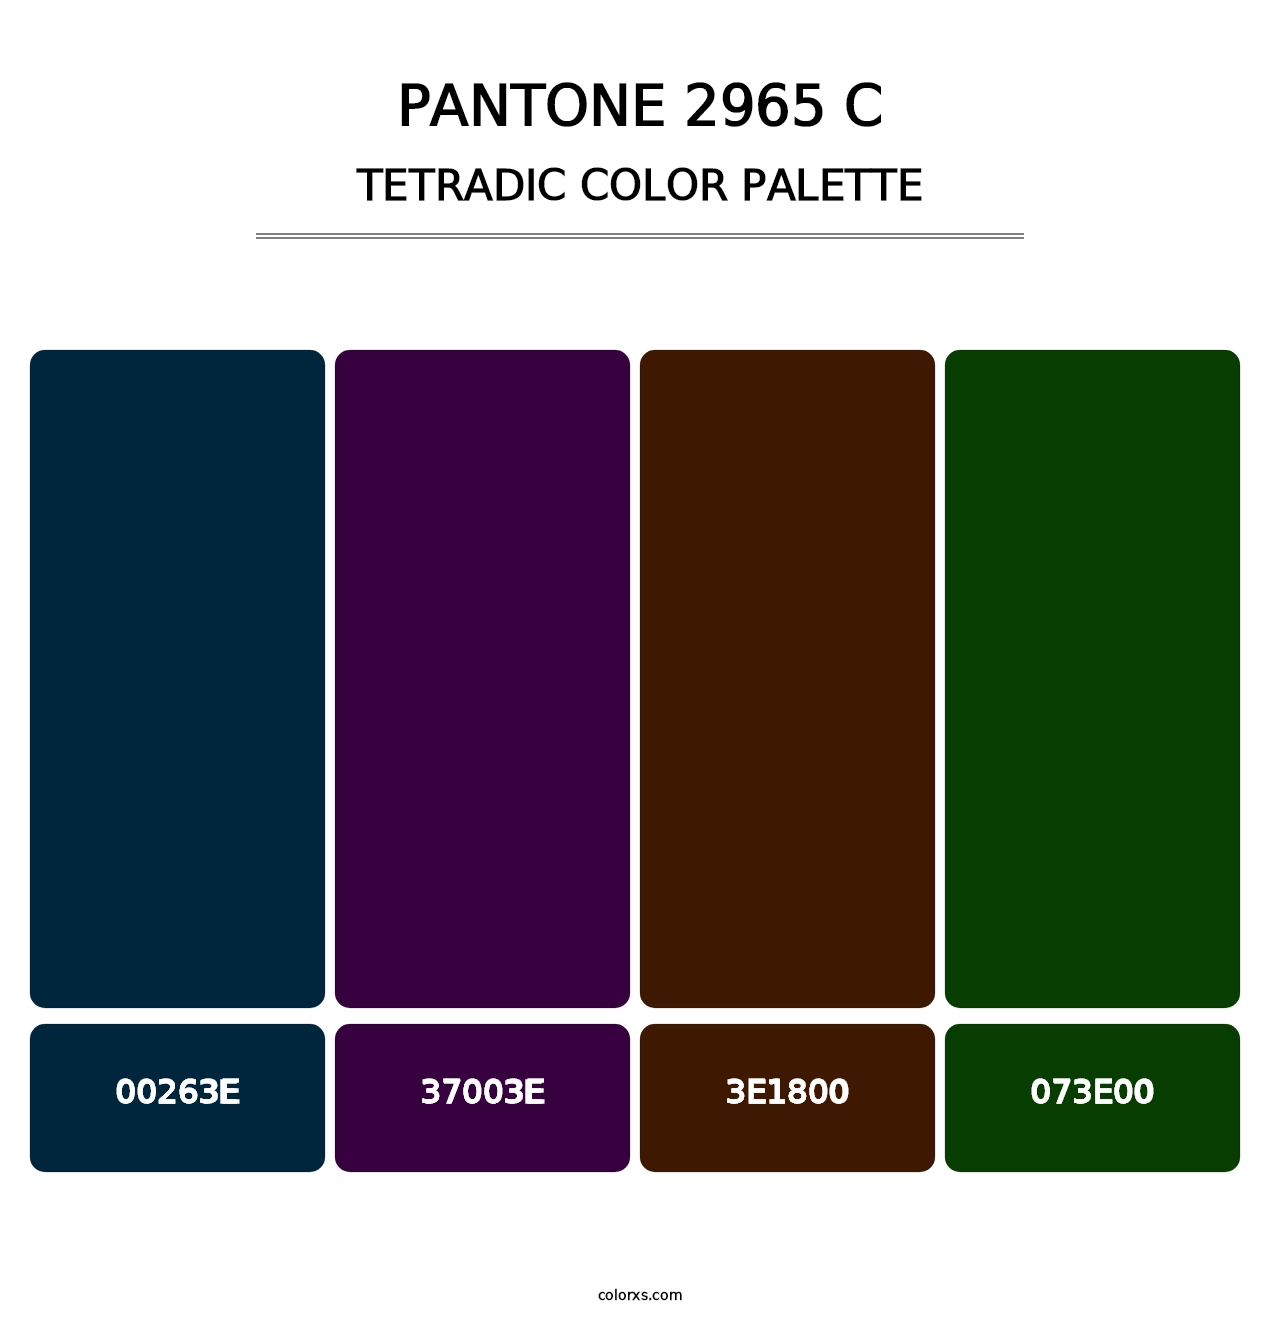 PANTONE 2965 C - Tetradic Color Palette